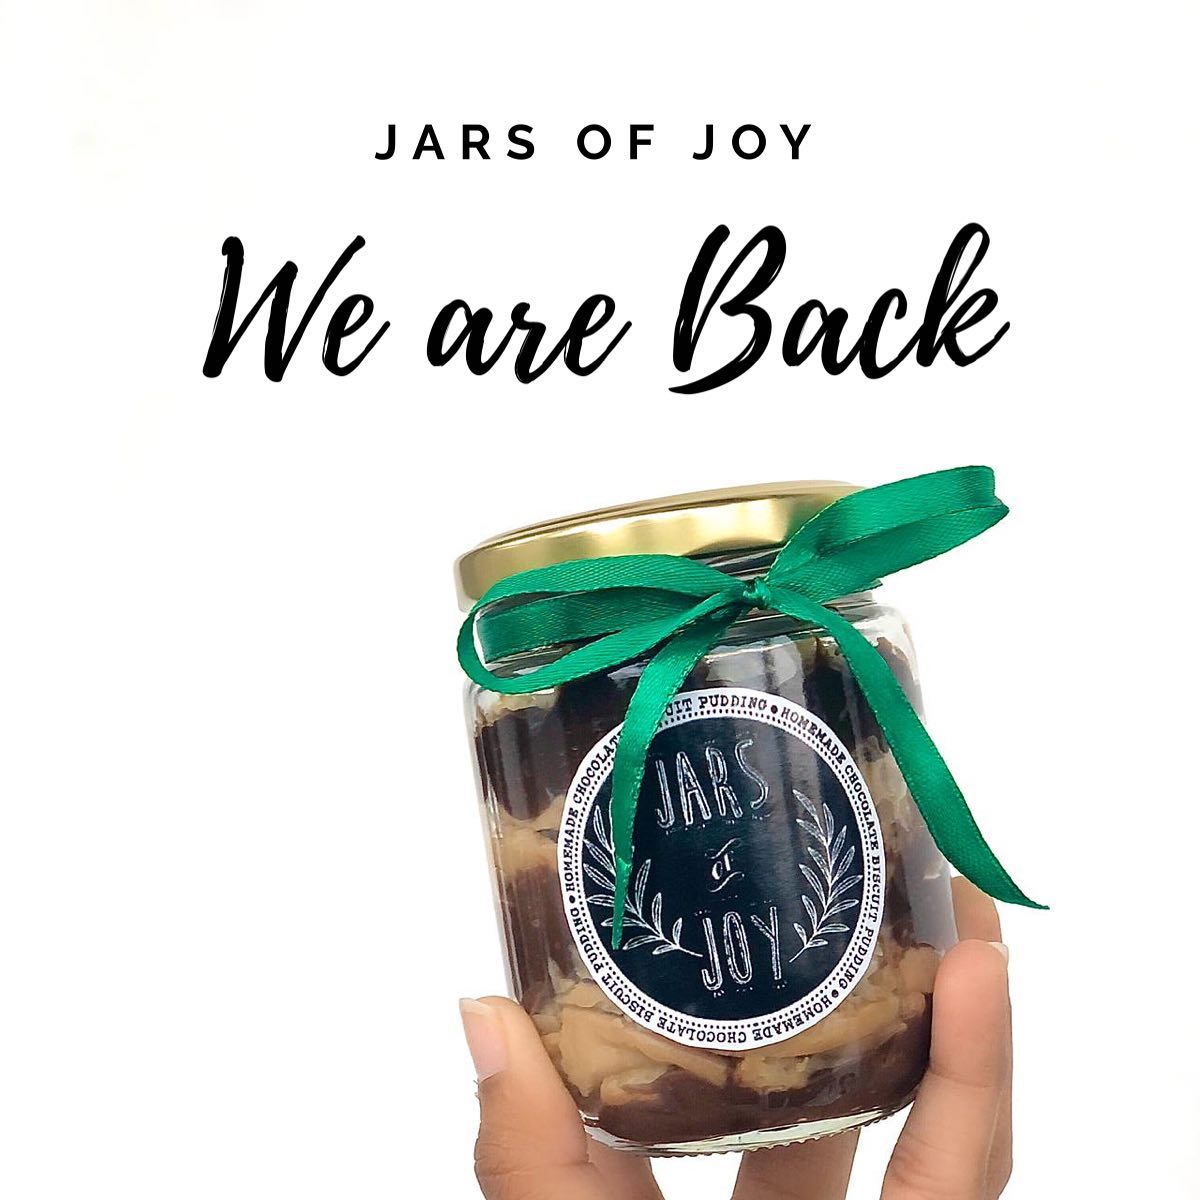 Jars of Joy